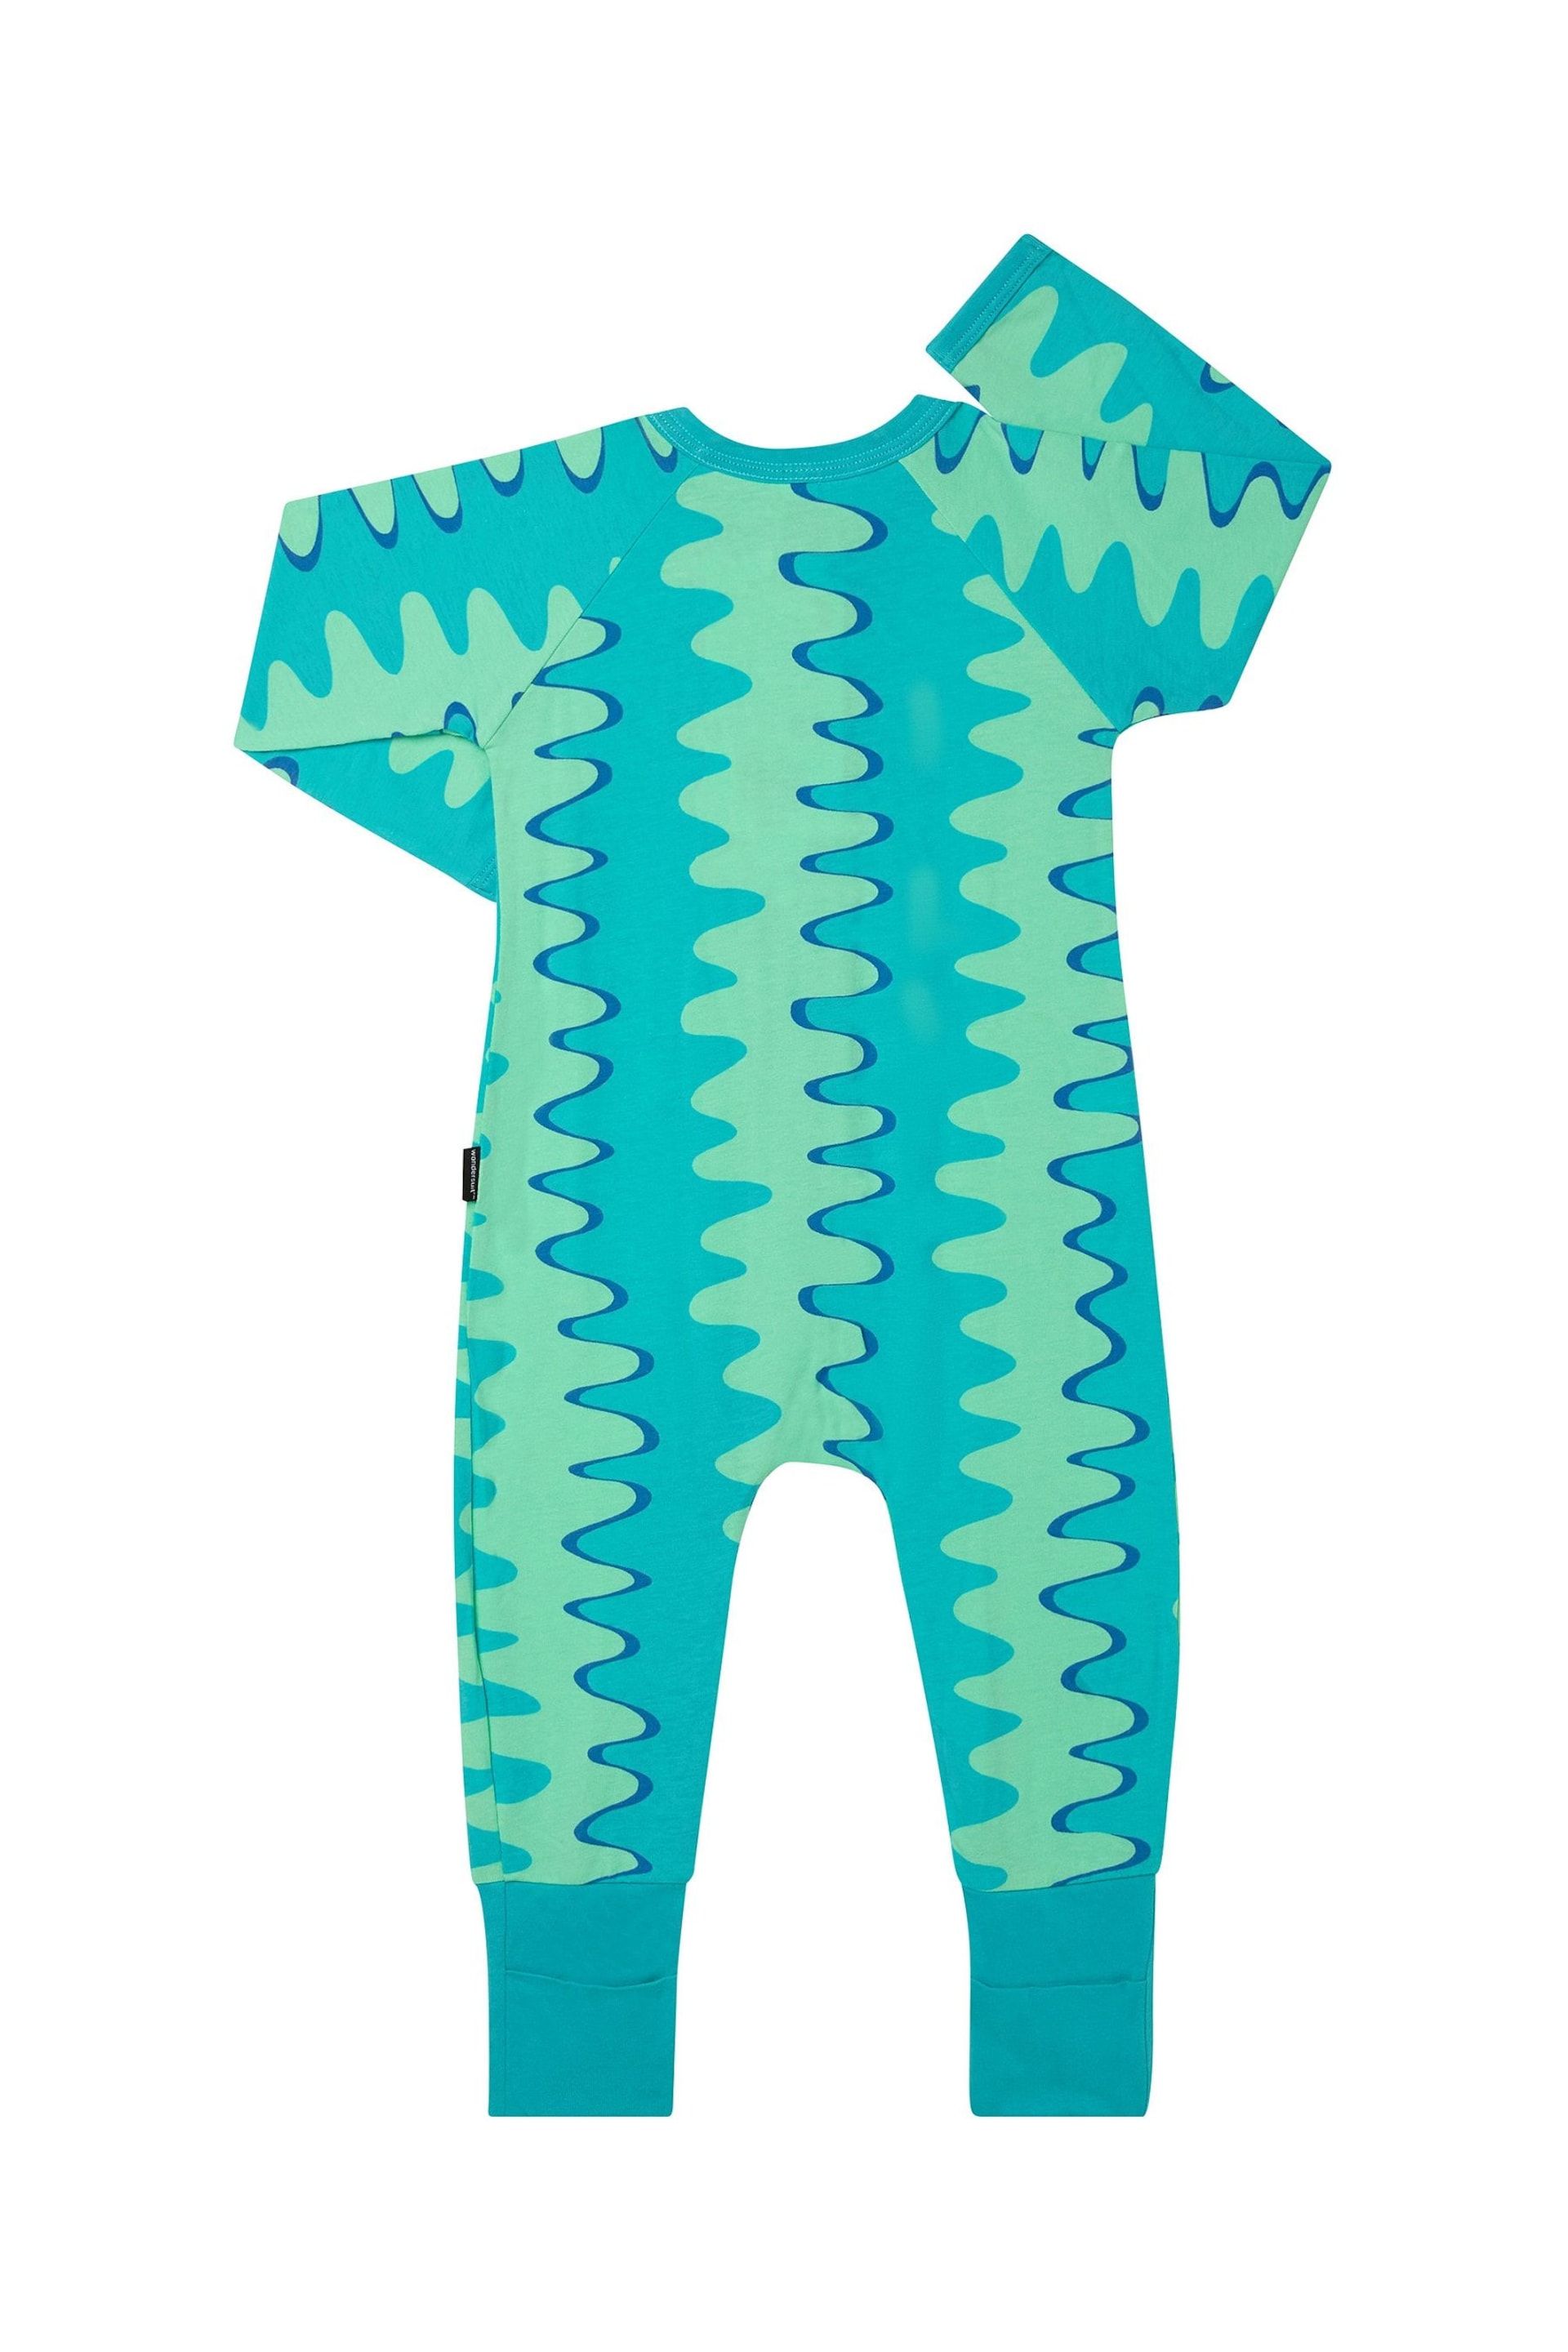 Bonds Green Dinosaur Stripe Abstract Print Zip Sleepsuit - Image 2 of 2